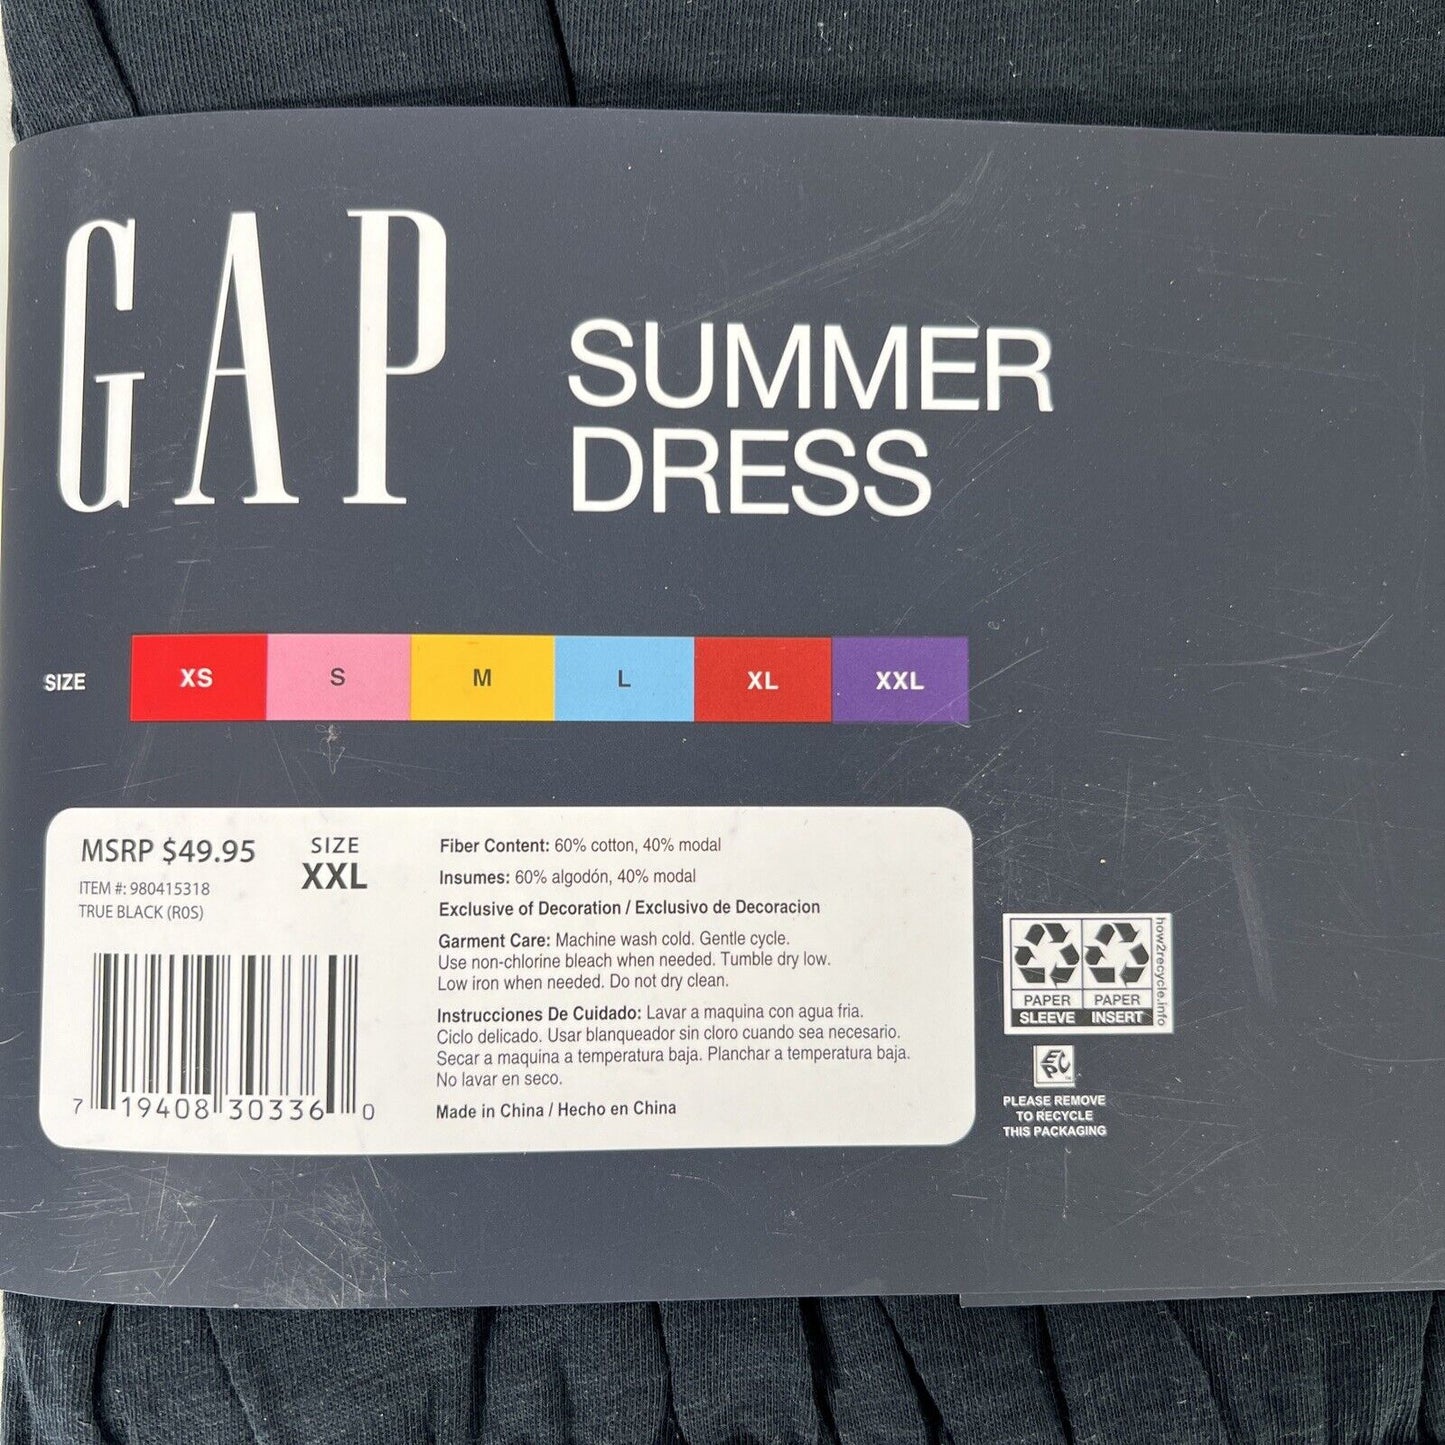 NEW GAP Women's Black Summer Dress with Pockets - XXL